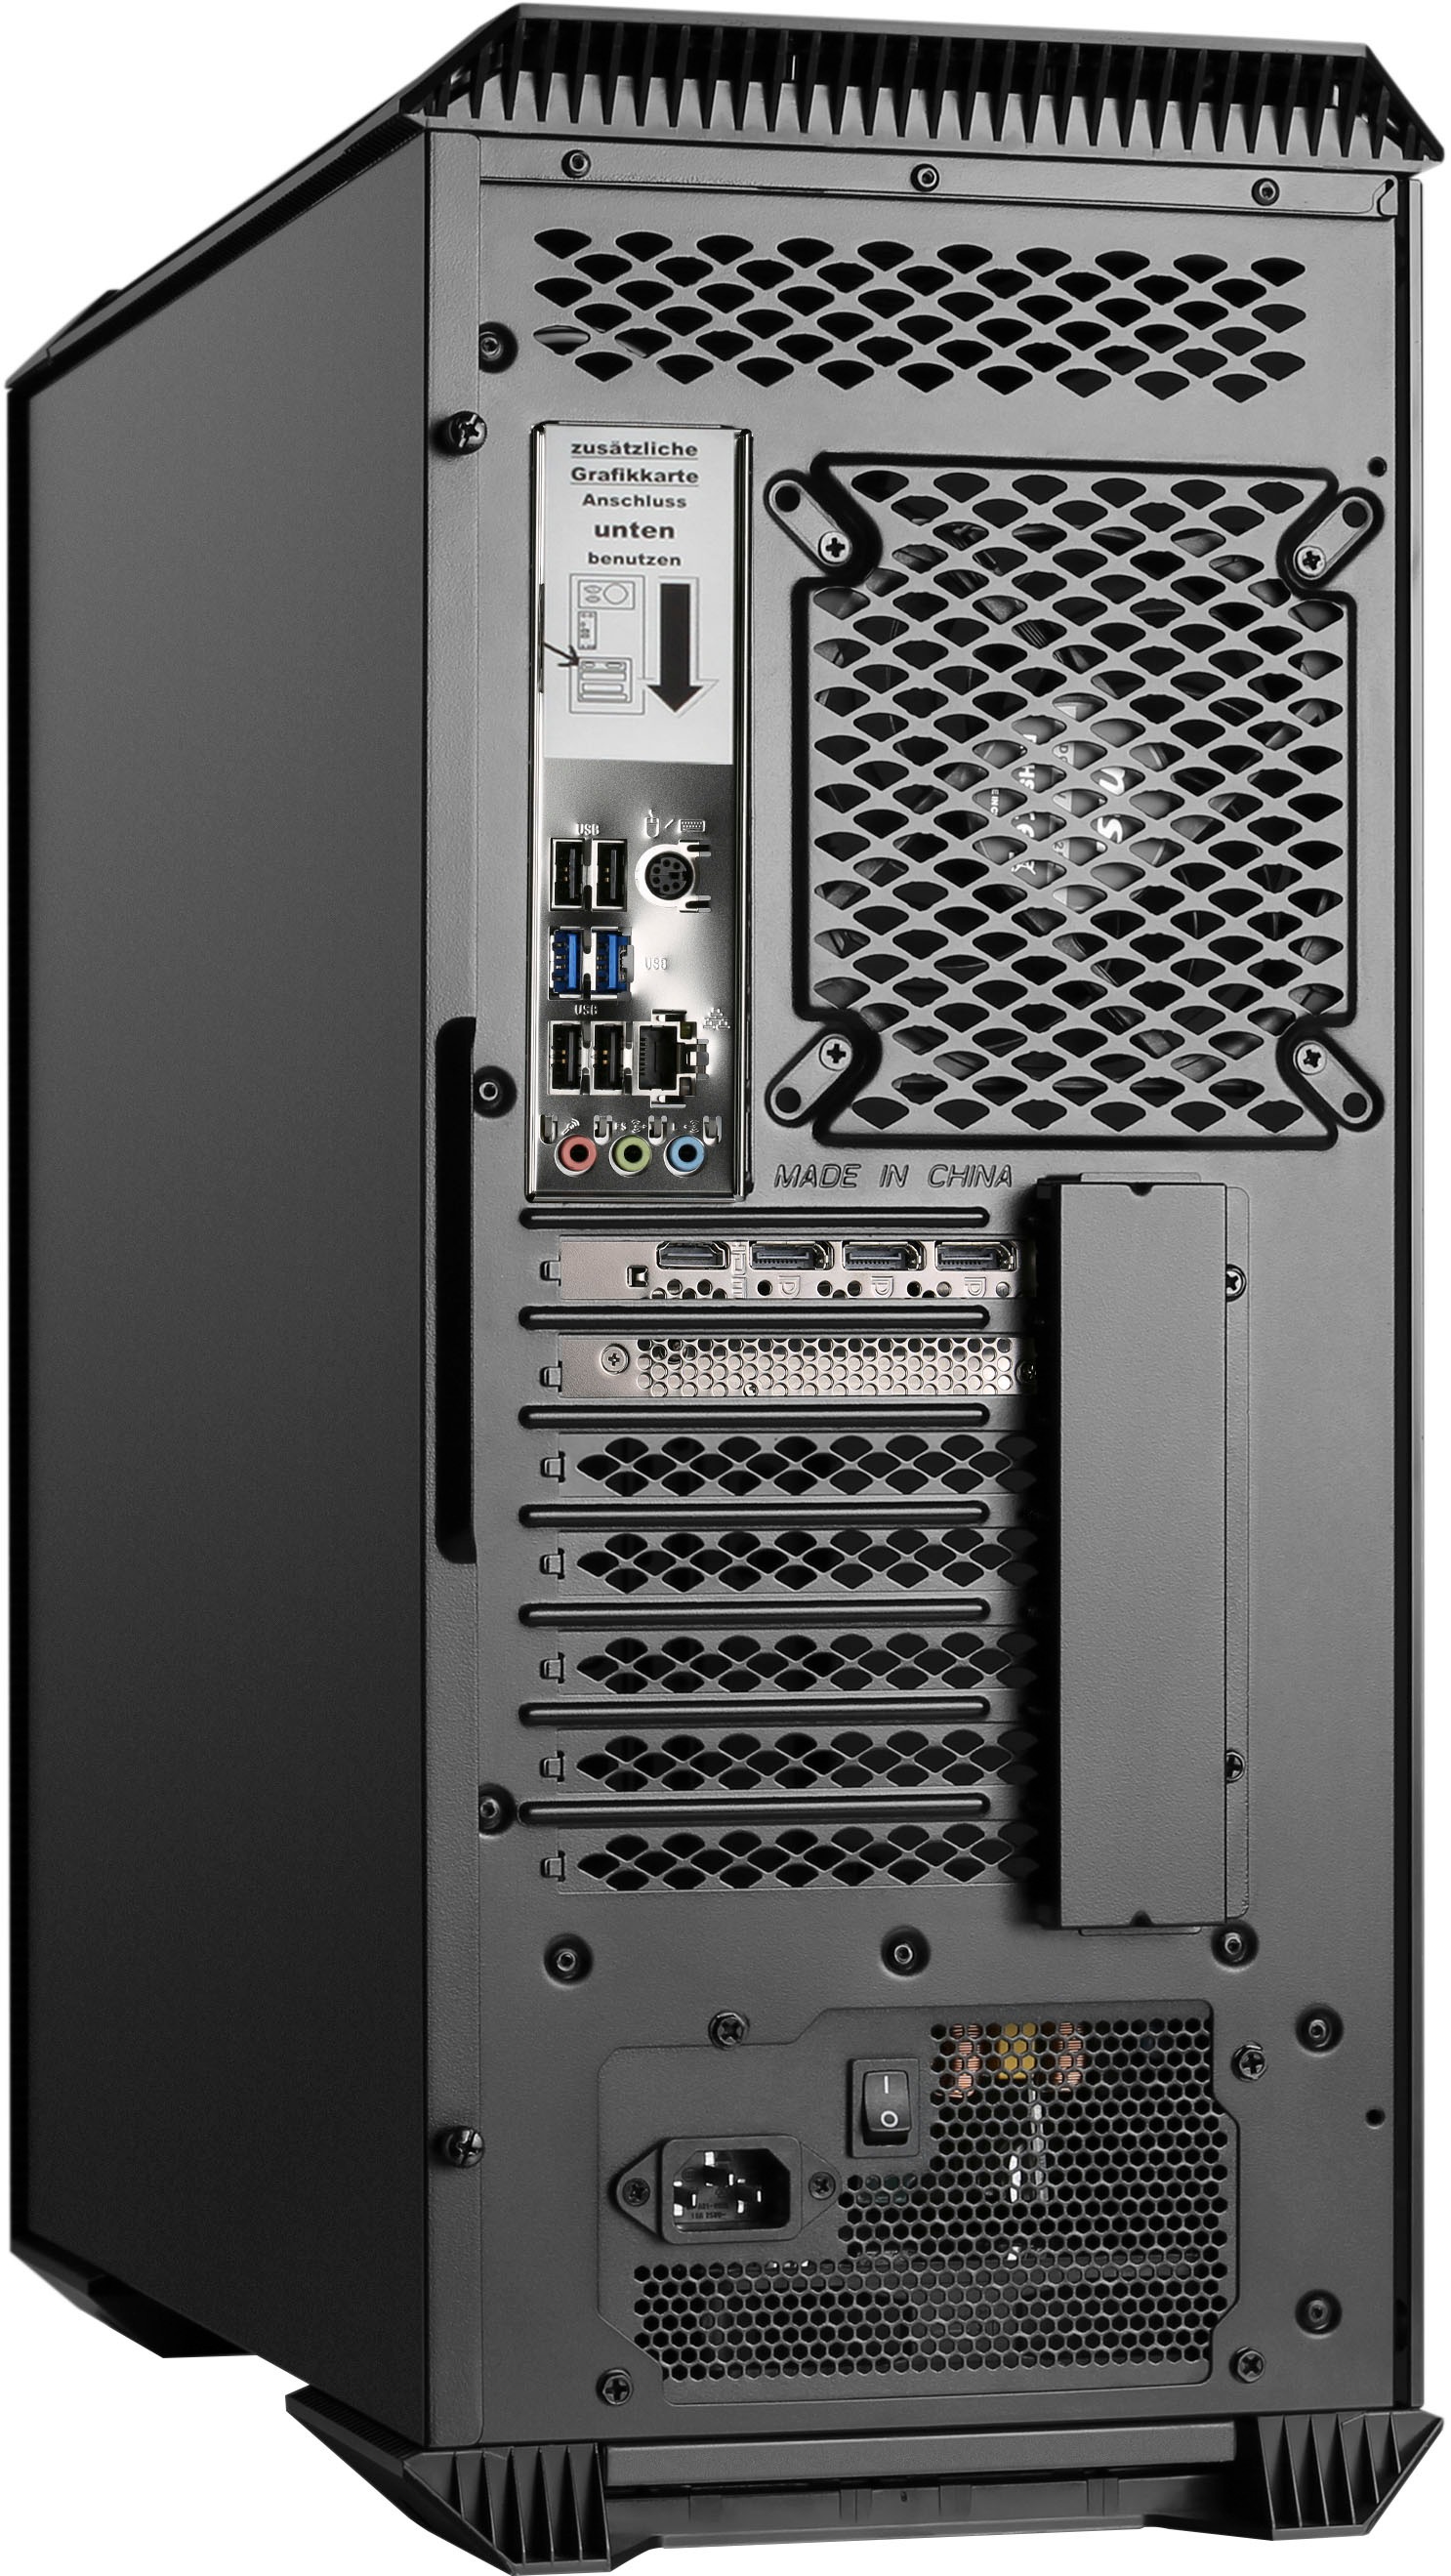 CSL Gaming-PC-Komplettsystem »Hydrox V29549 MSI Dragon Advanced Edition«